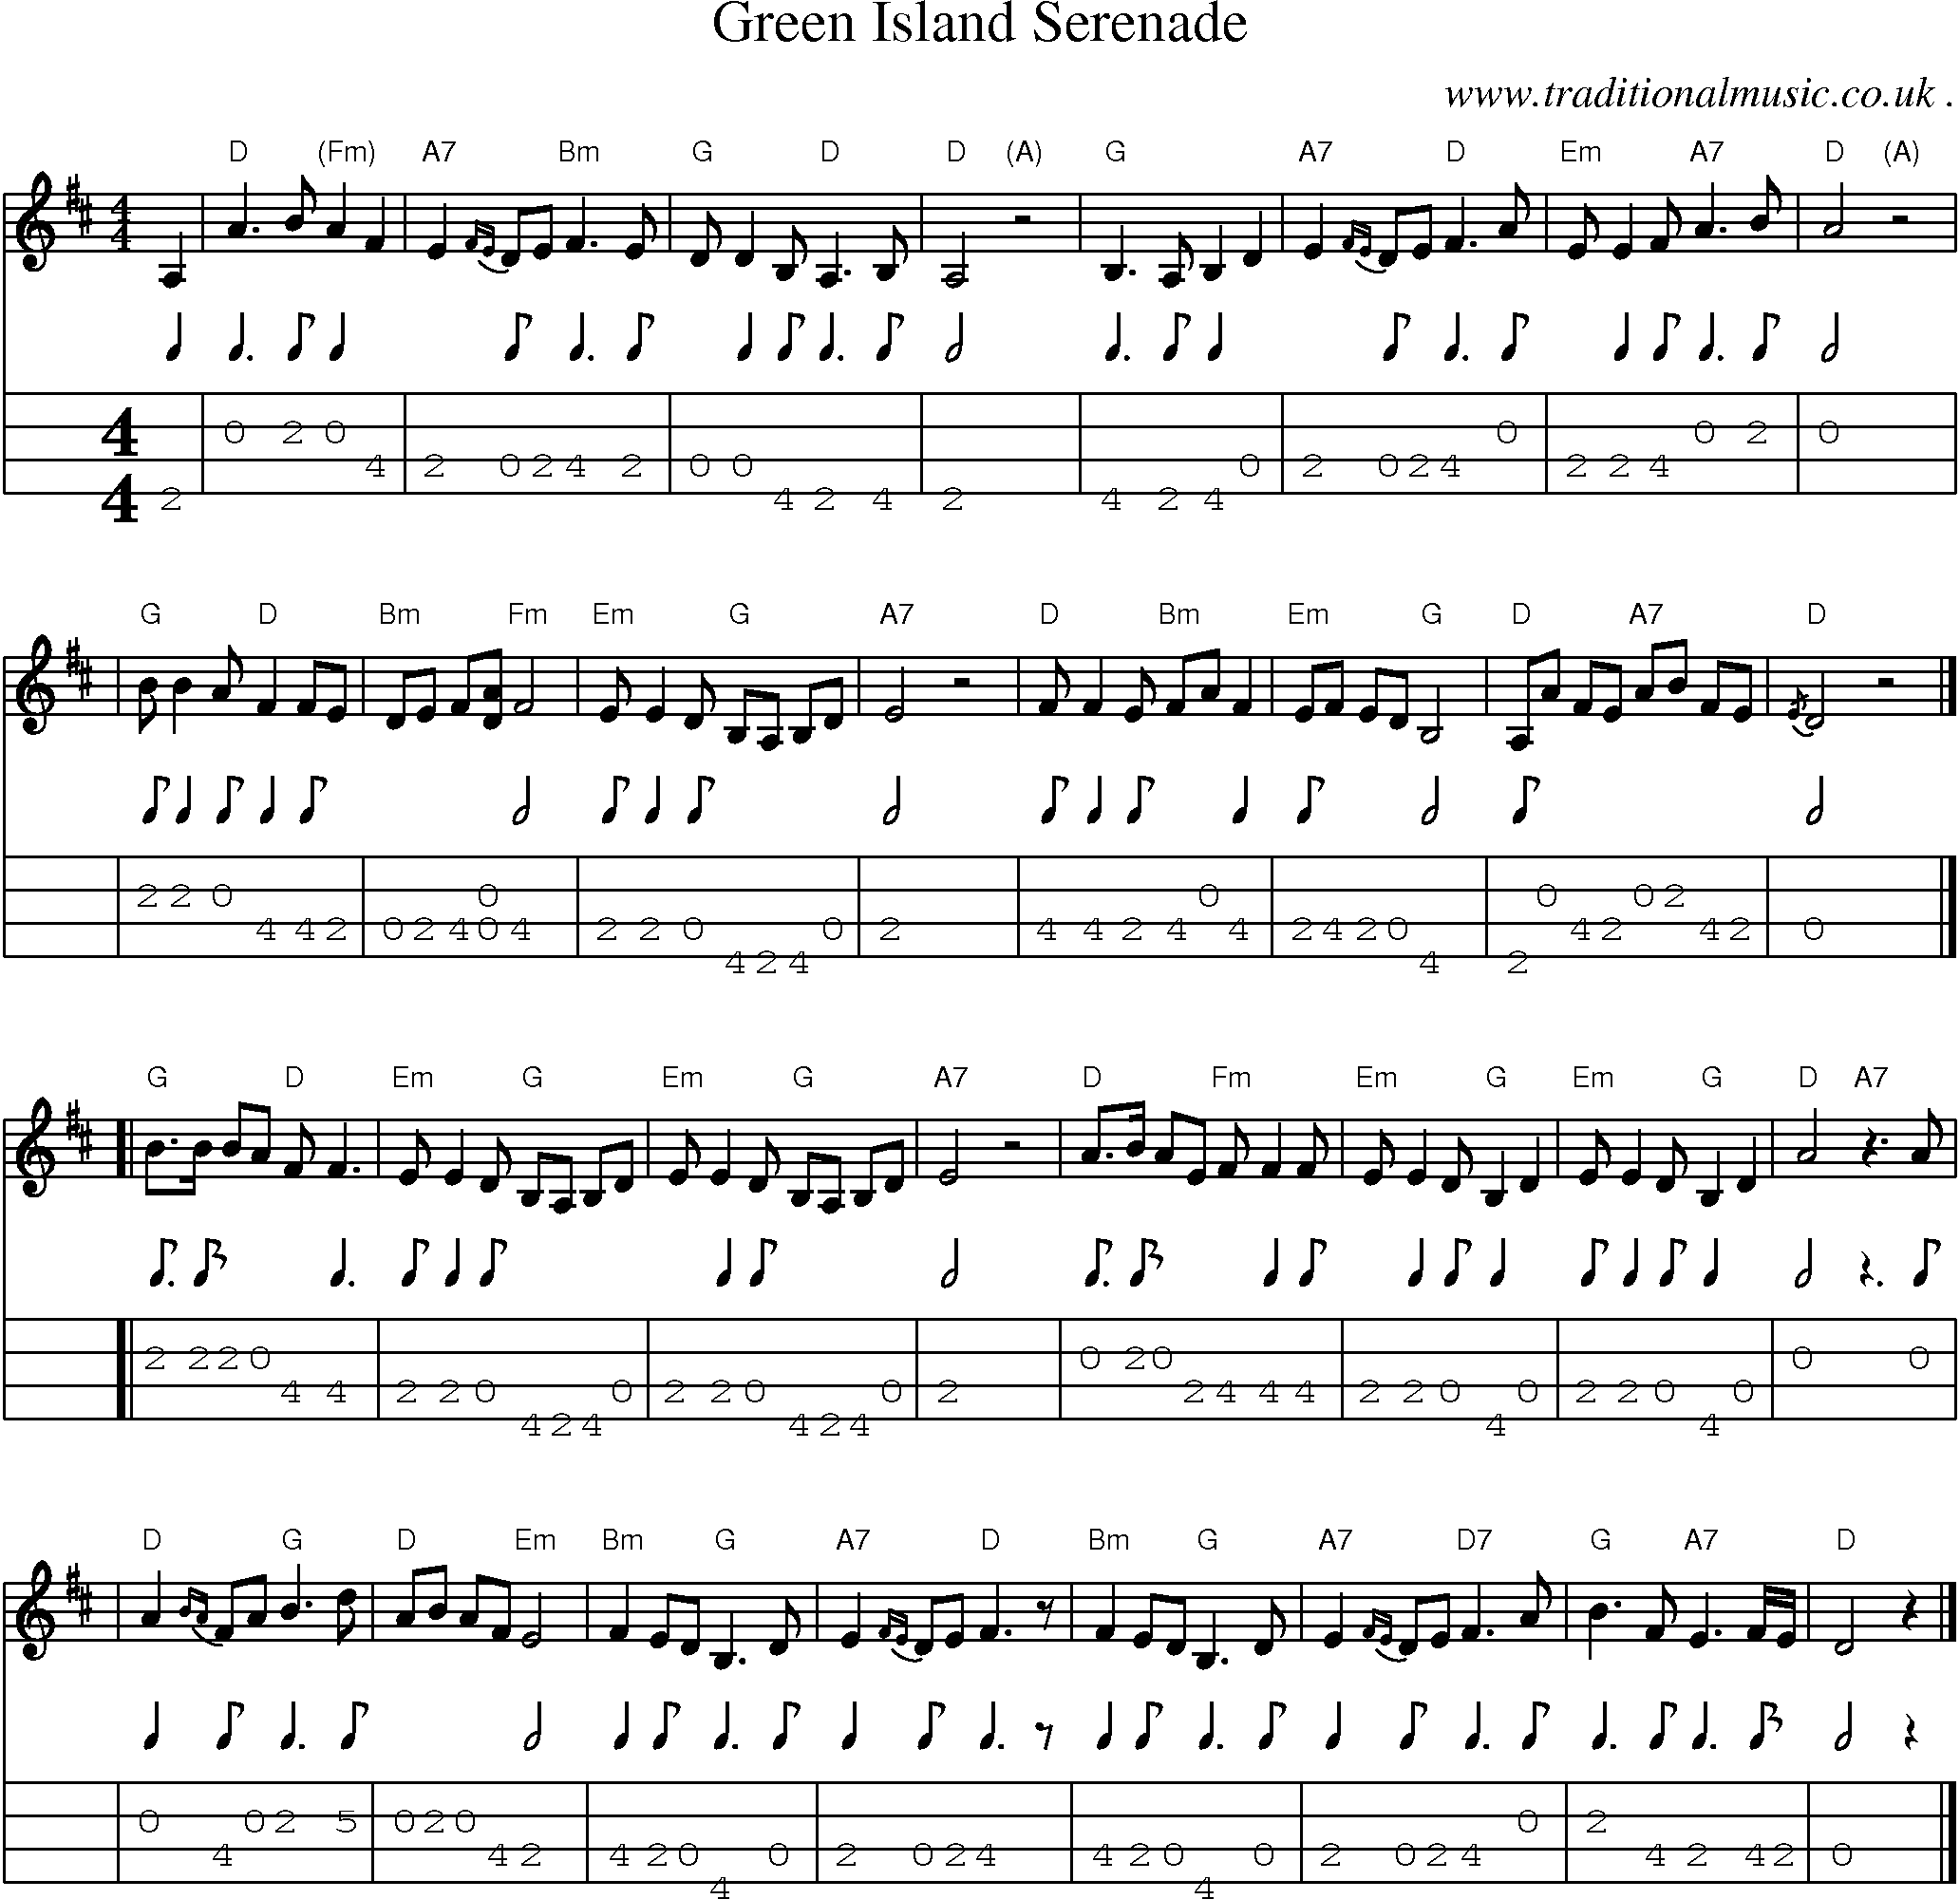 Sheet-music  score, Chords and Mandolin Tabs for Green Island Serenade